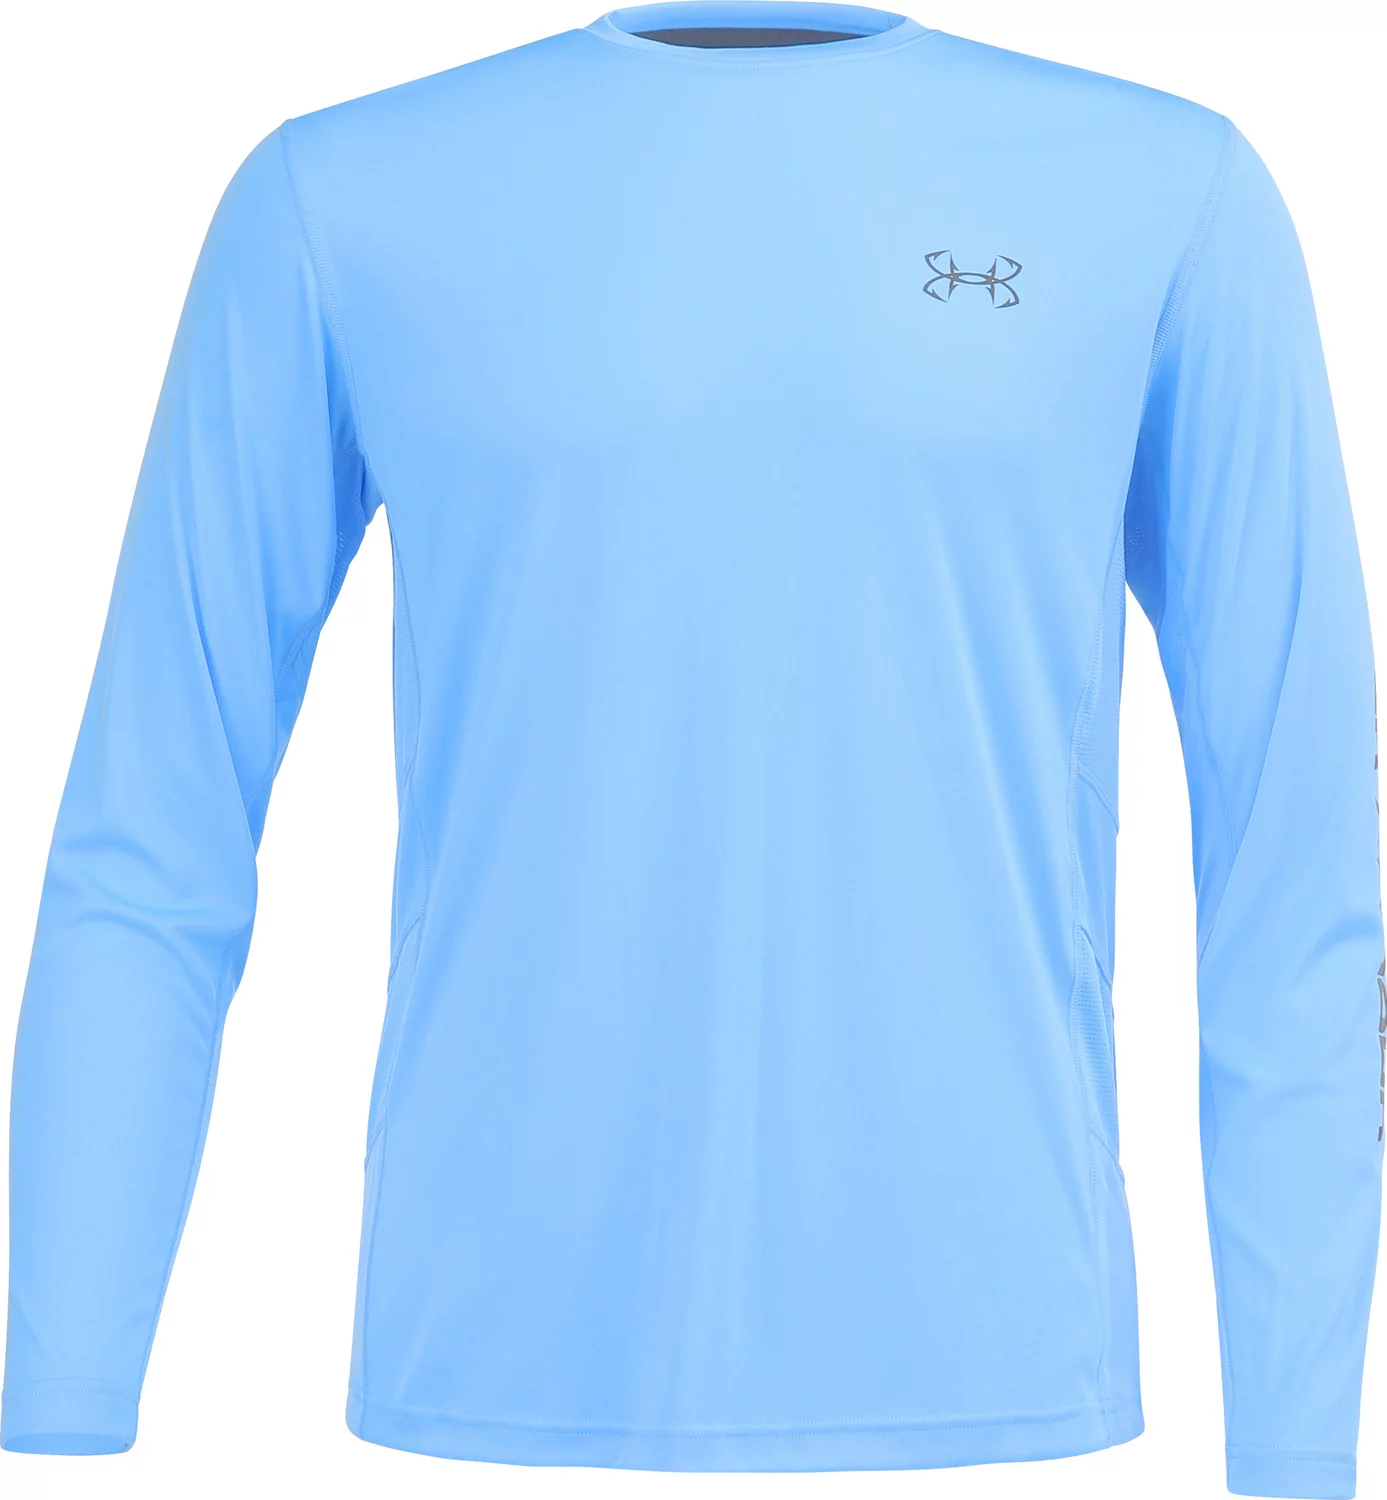 Buy light blue under armour shirt - 62 